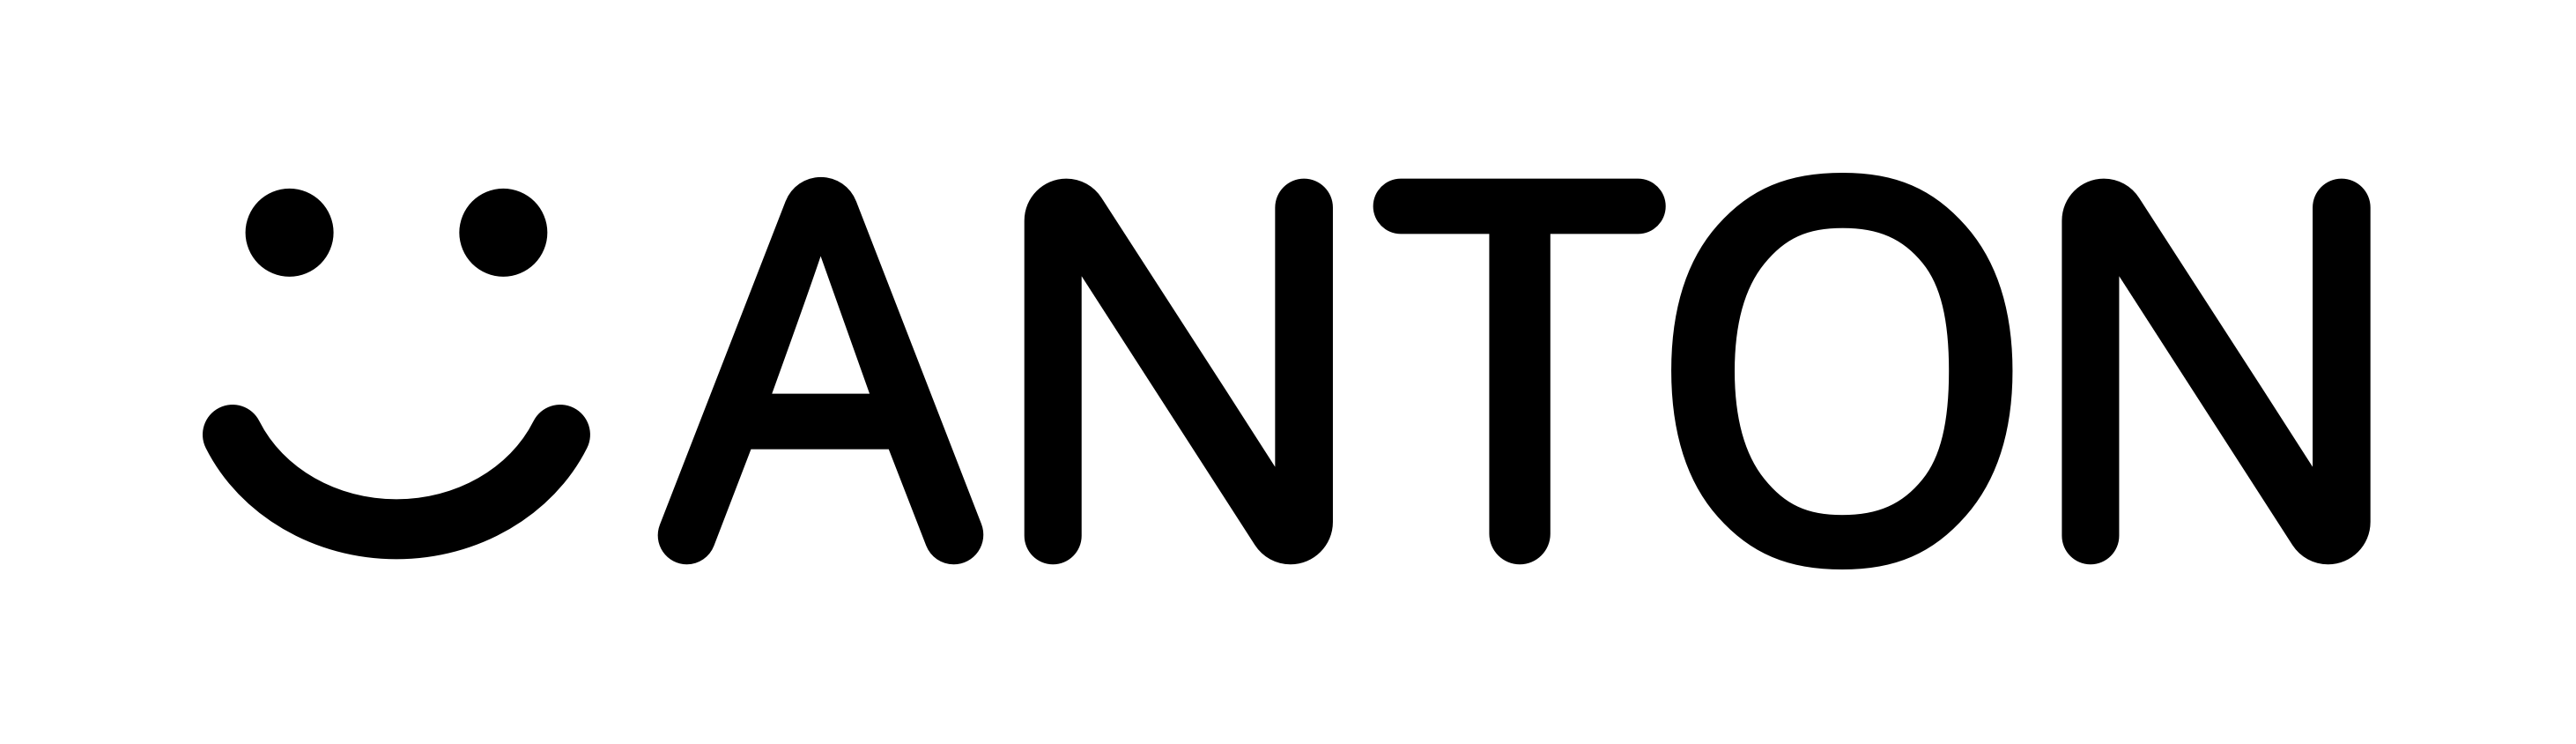 ANTON logo slim4x